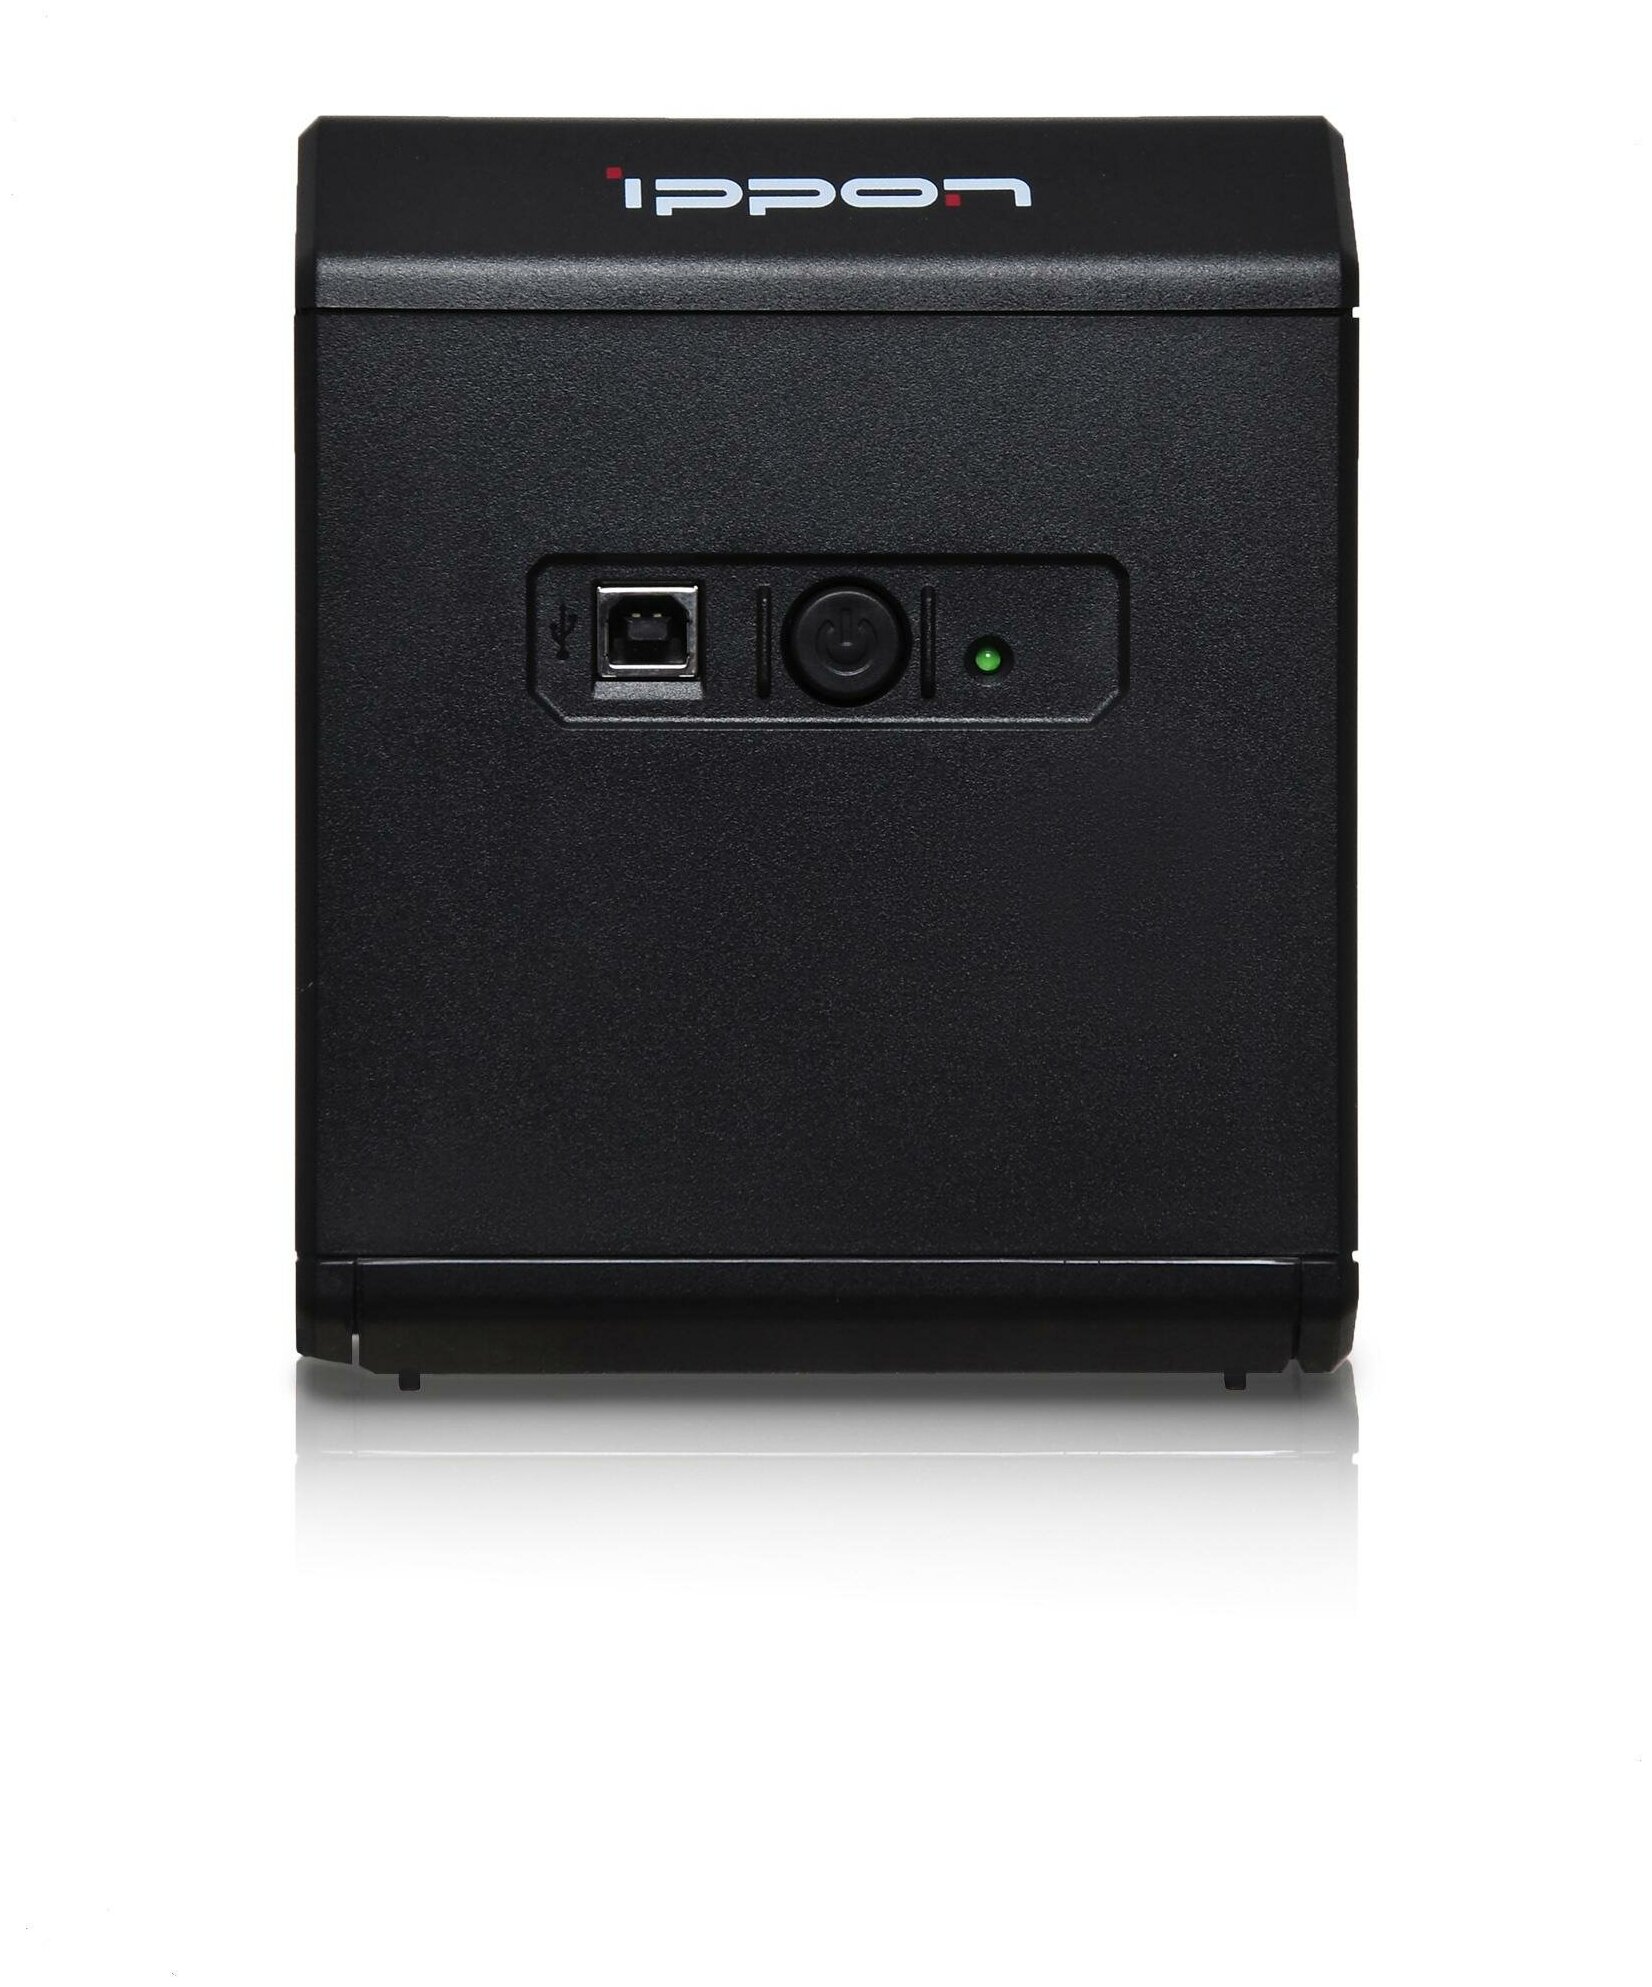 Интерактивный ИБП IPPON Back Comfo Pro II 650